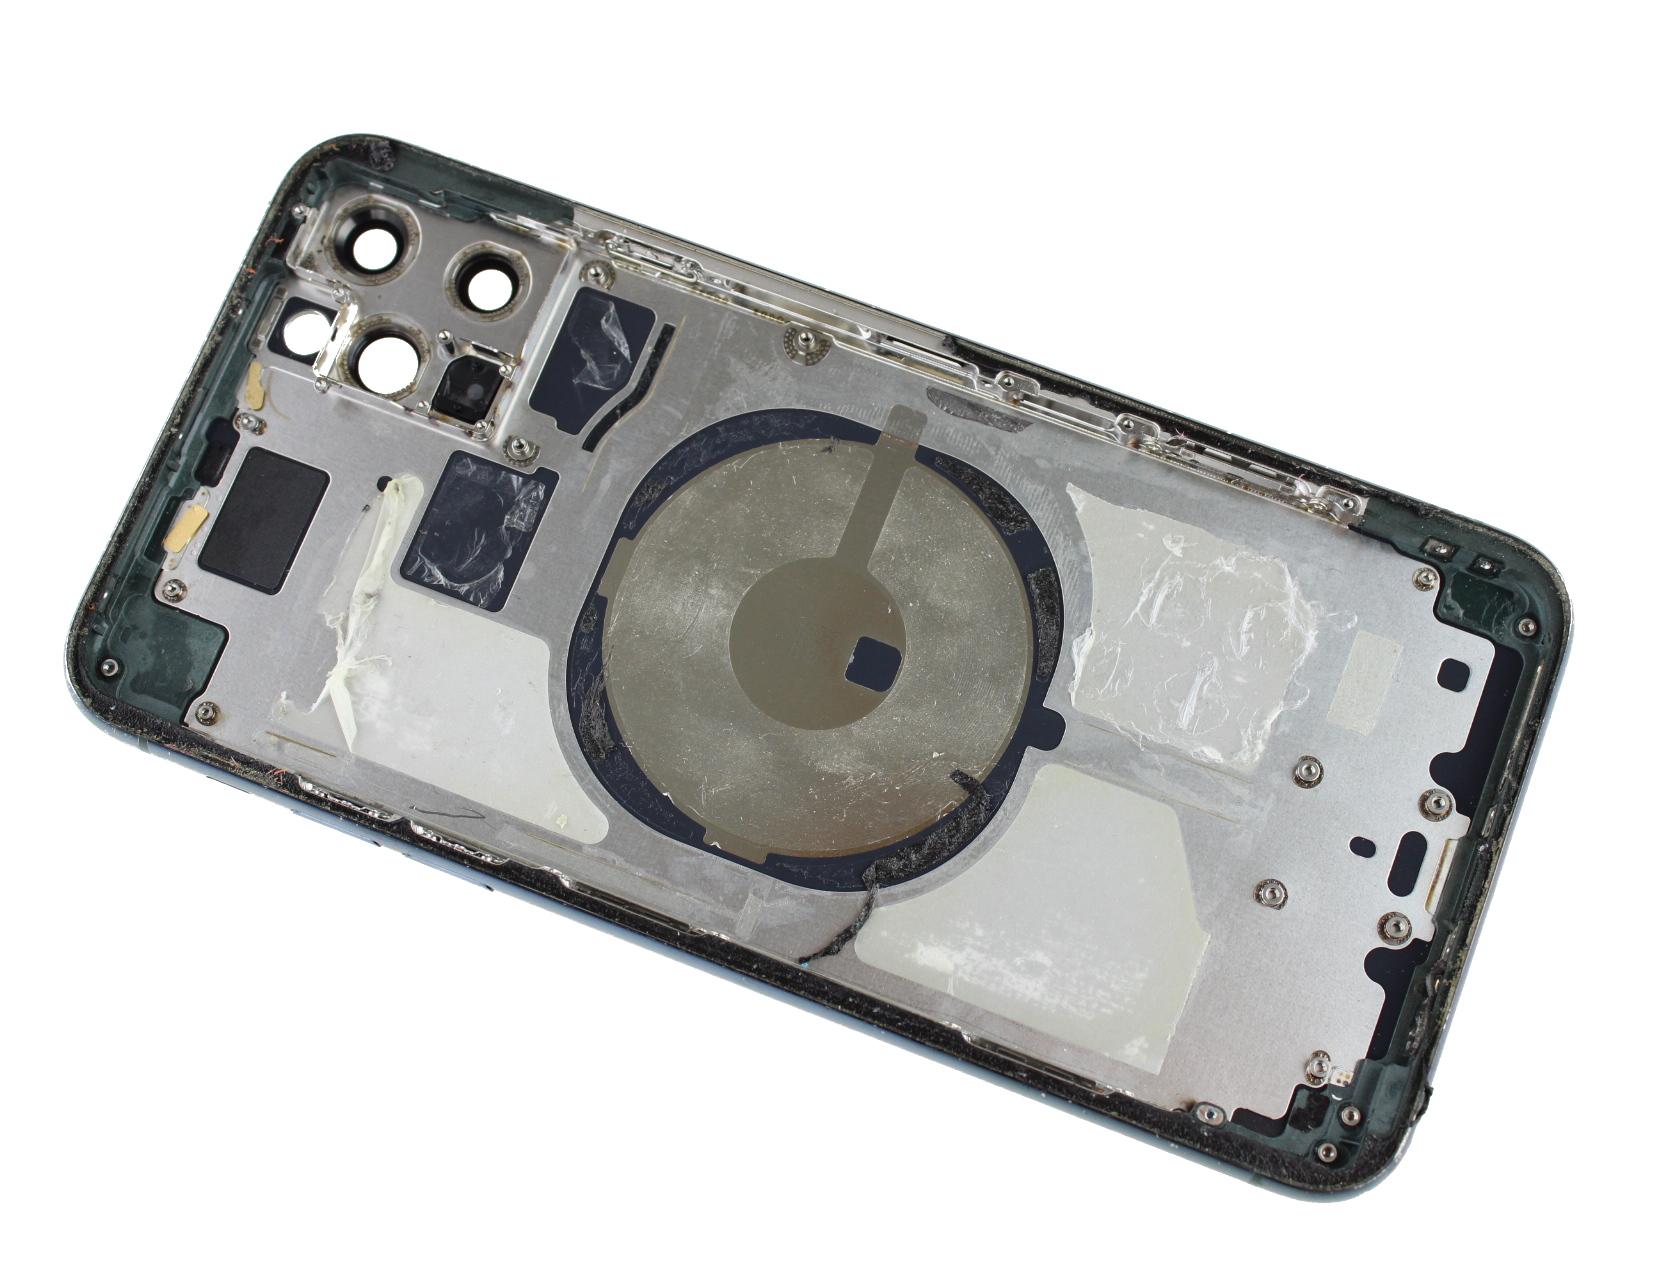 Originál korpus iPhone 11 Pro Max zelený - demontovaný produkt